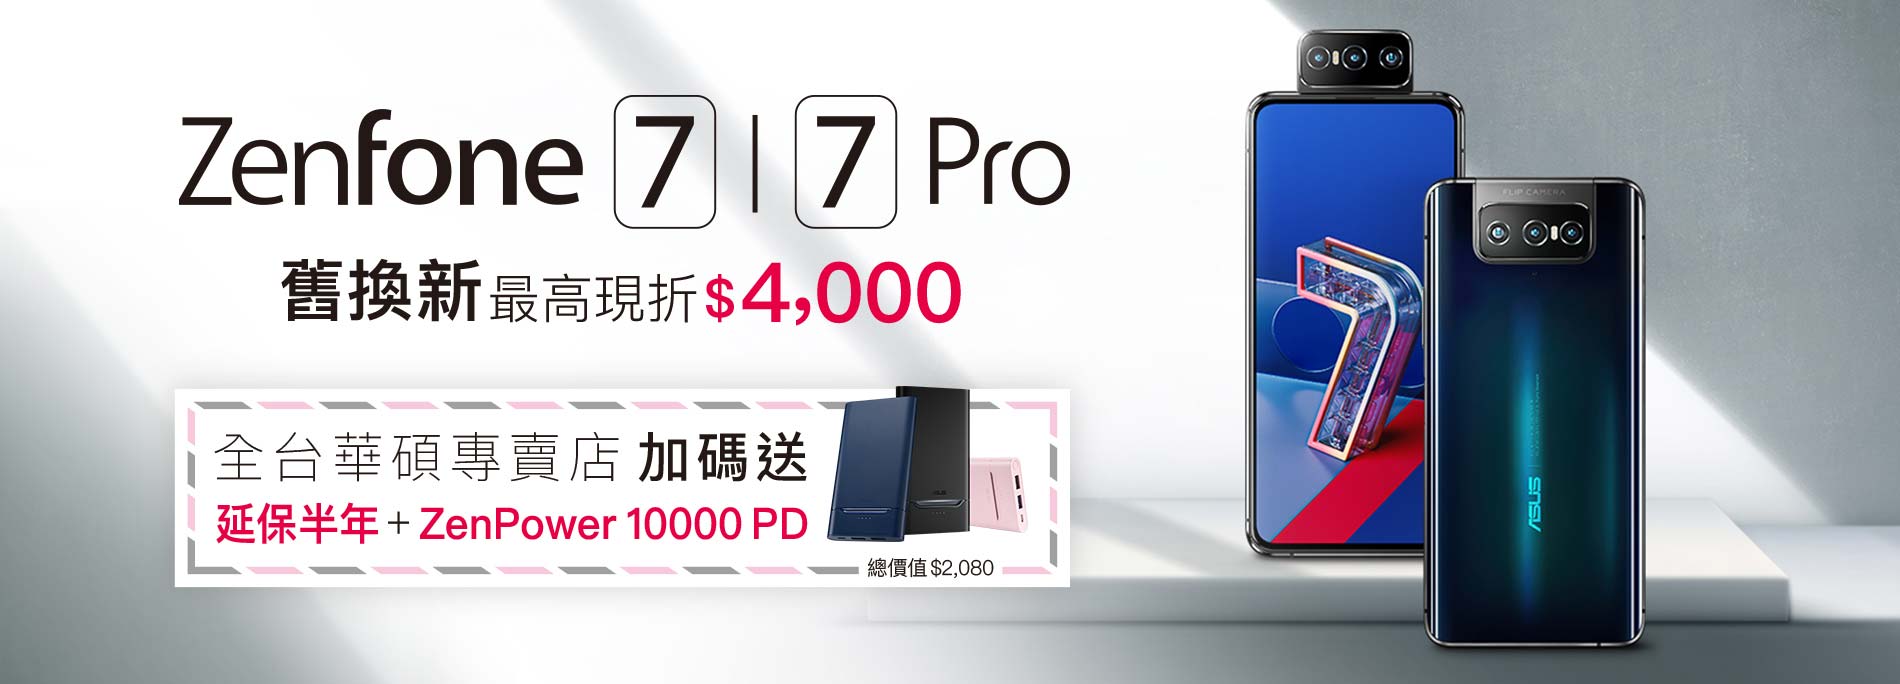 【9月舊換新】舊機換 ZenFone 7 / 7 Pro，最高現折 $4,000